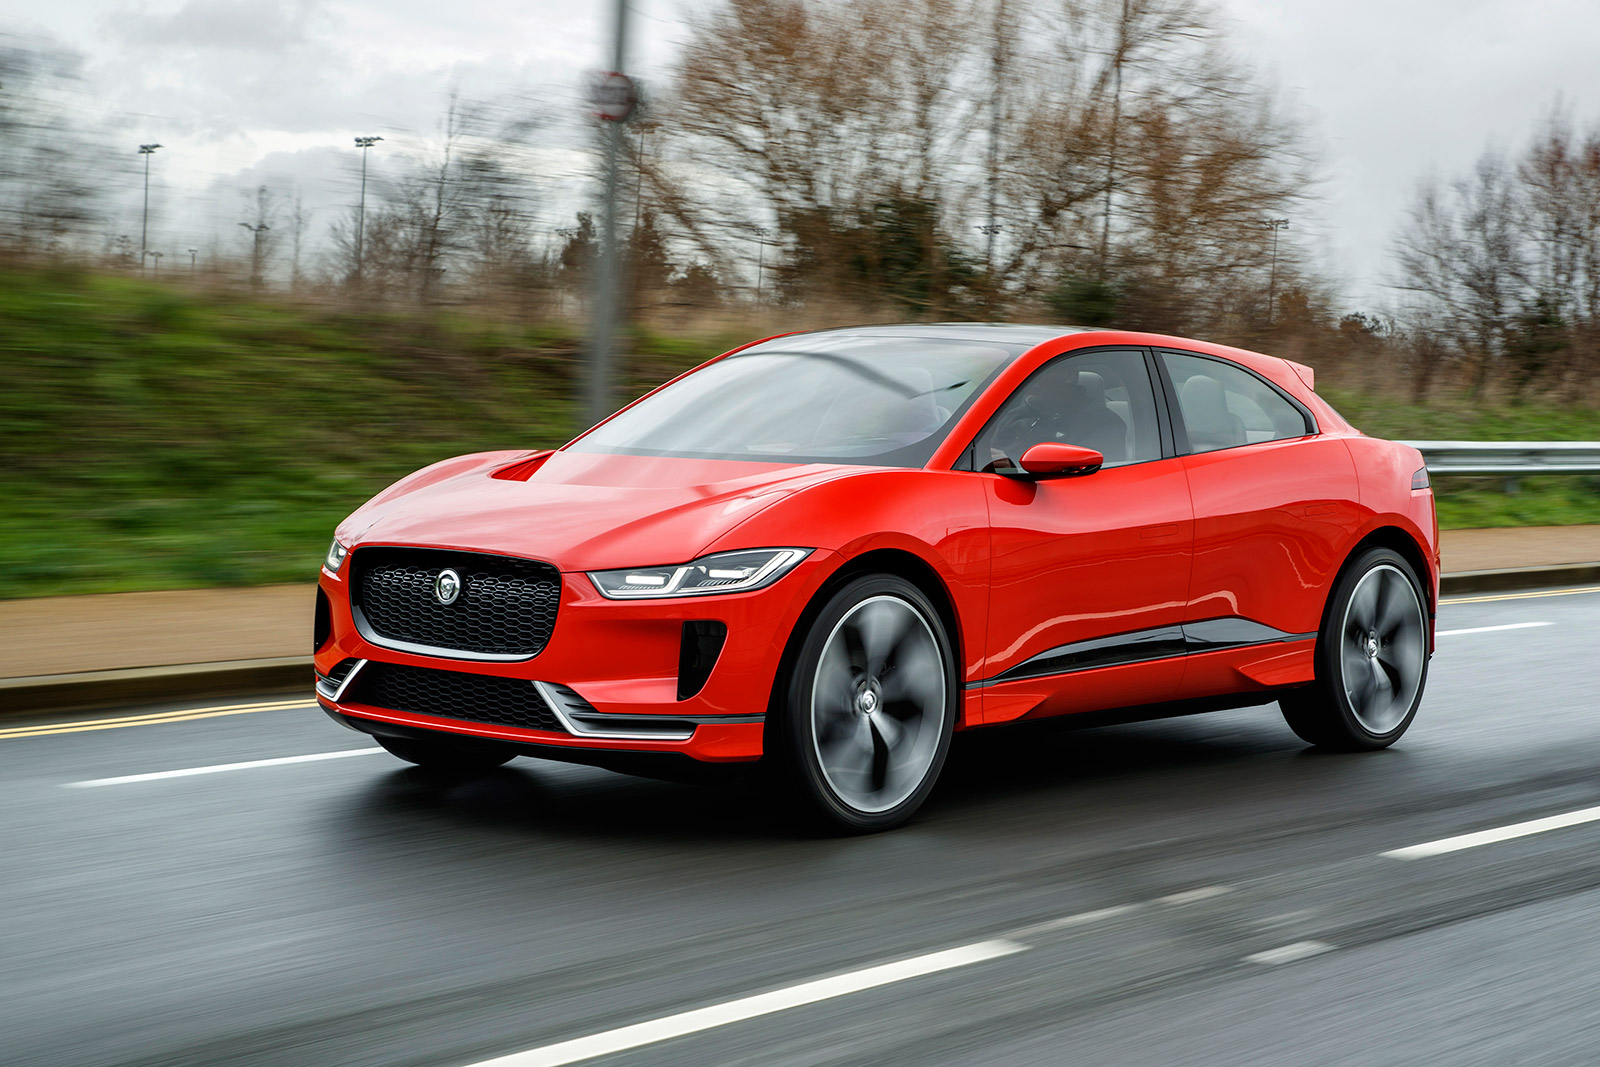 Jaguar has unleashed its first electric vehicle the Jaguar IPACE